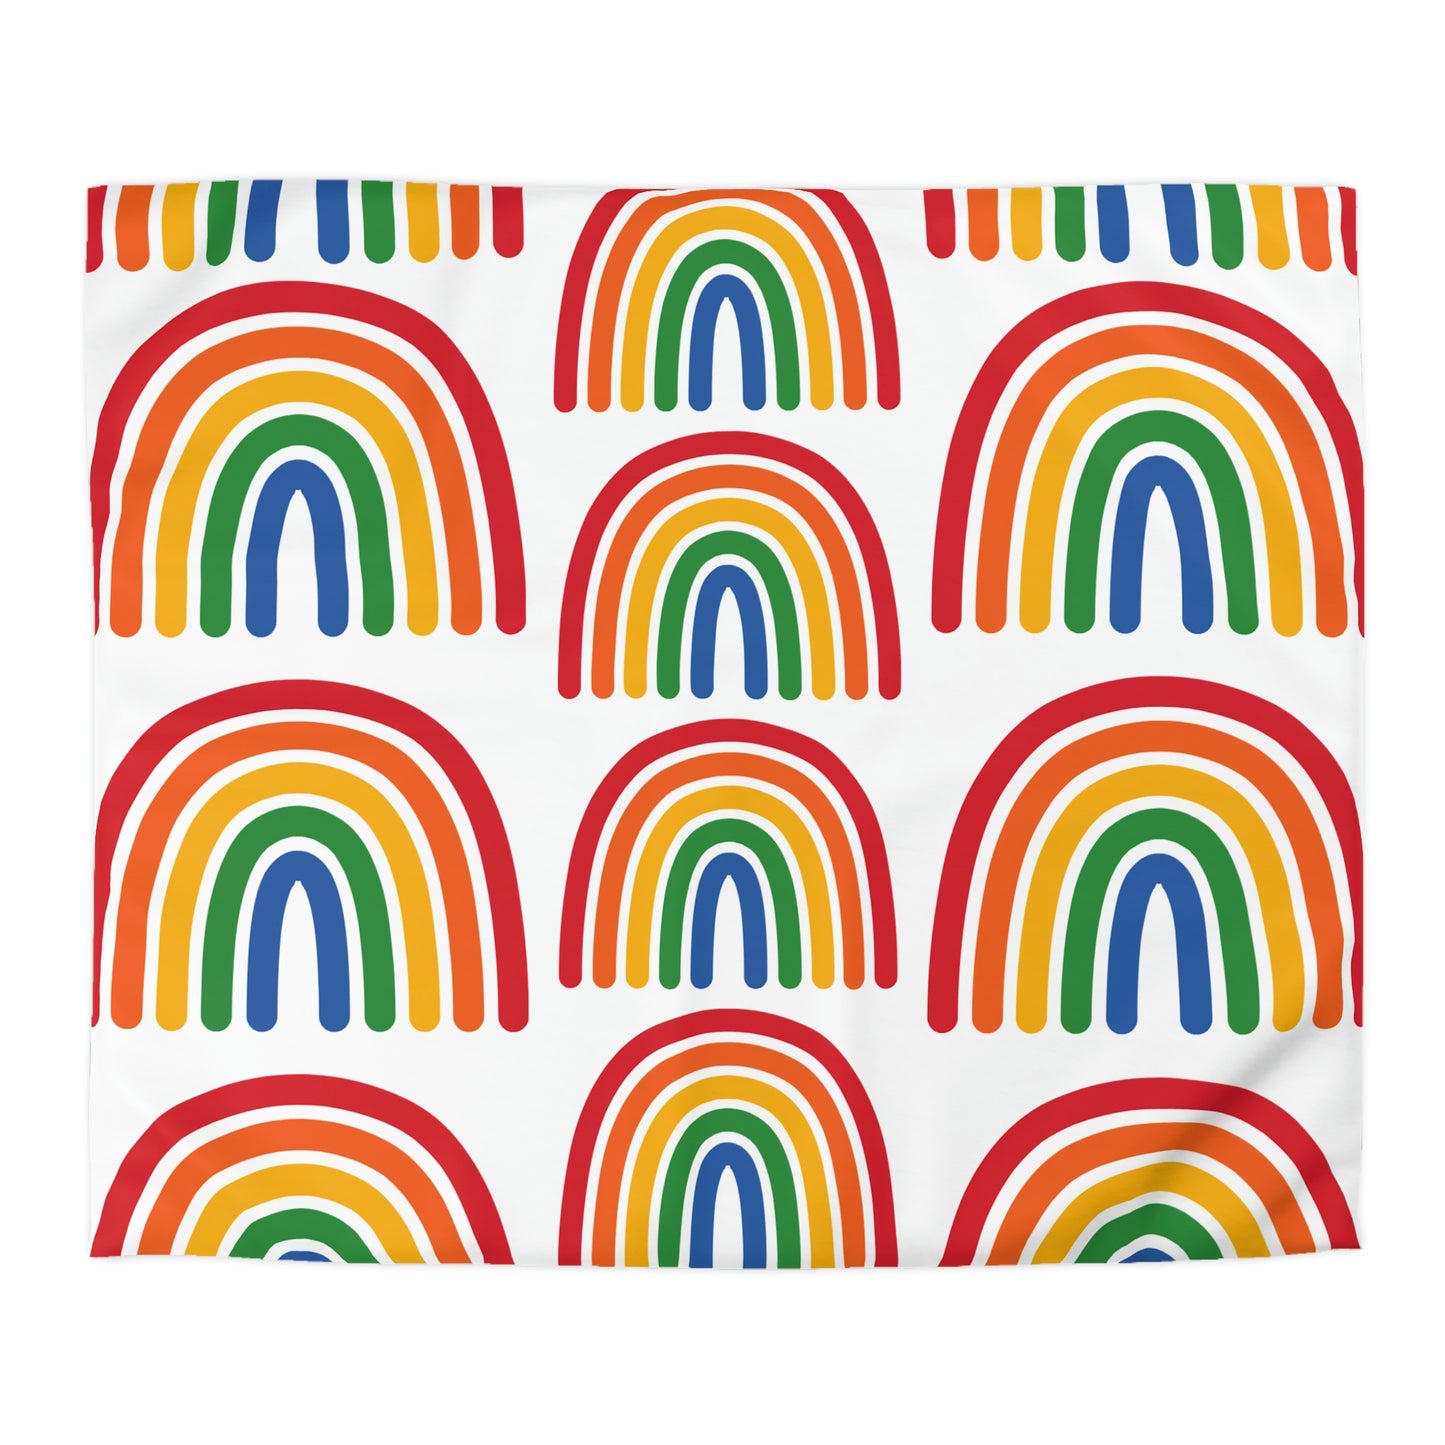 Rainbow Duvet, Multiple Rainbow, Rainbow Pattern, Drop Pattern, Duvet Cover